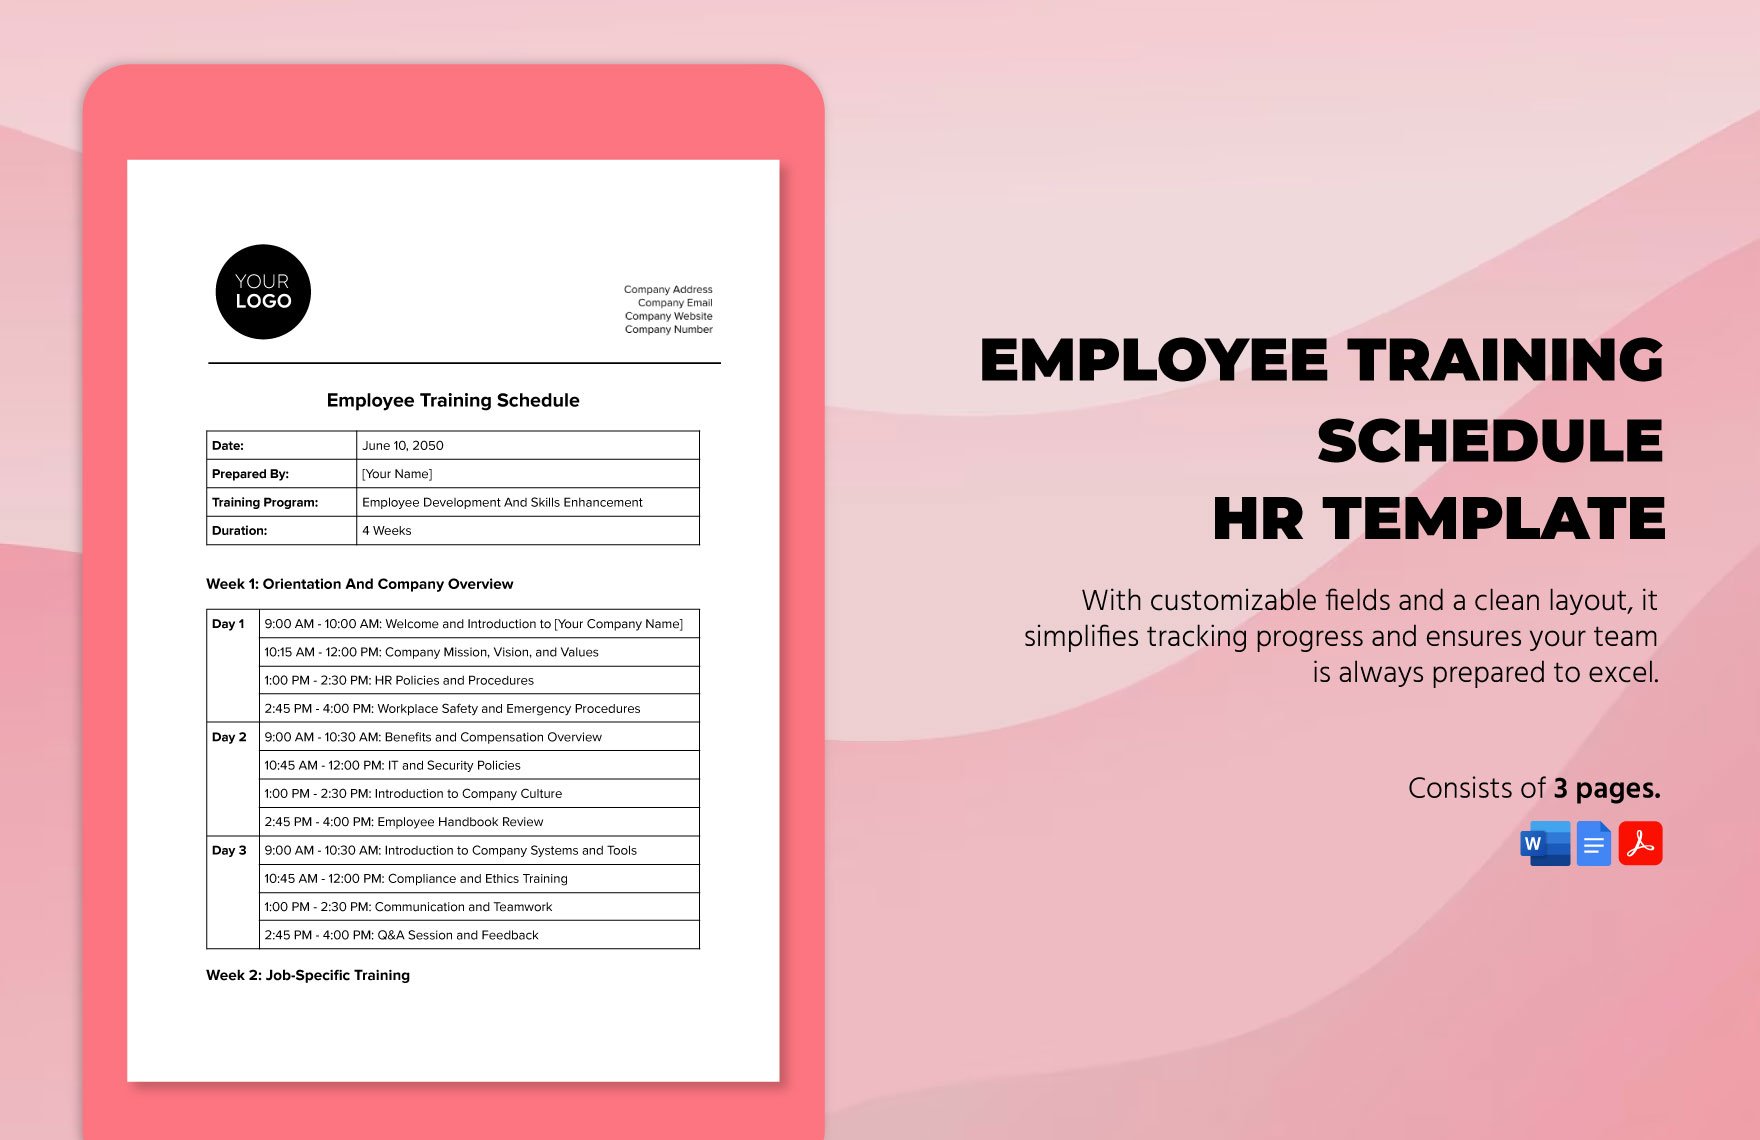 Employee Training Schedule HR Template